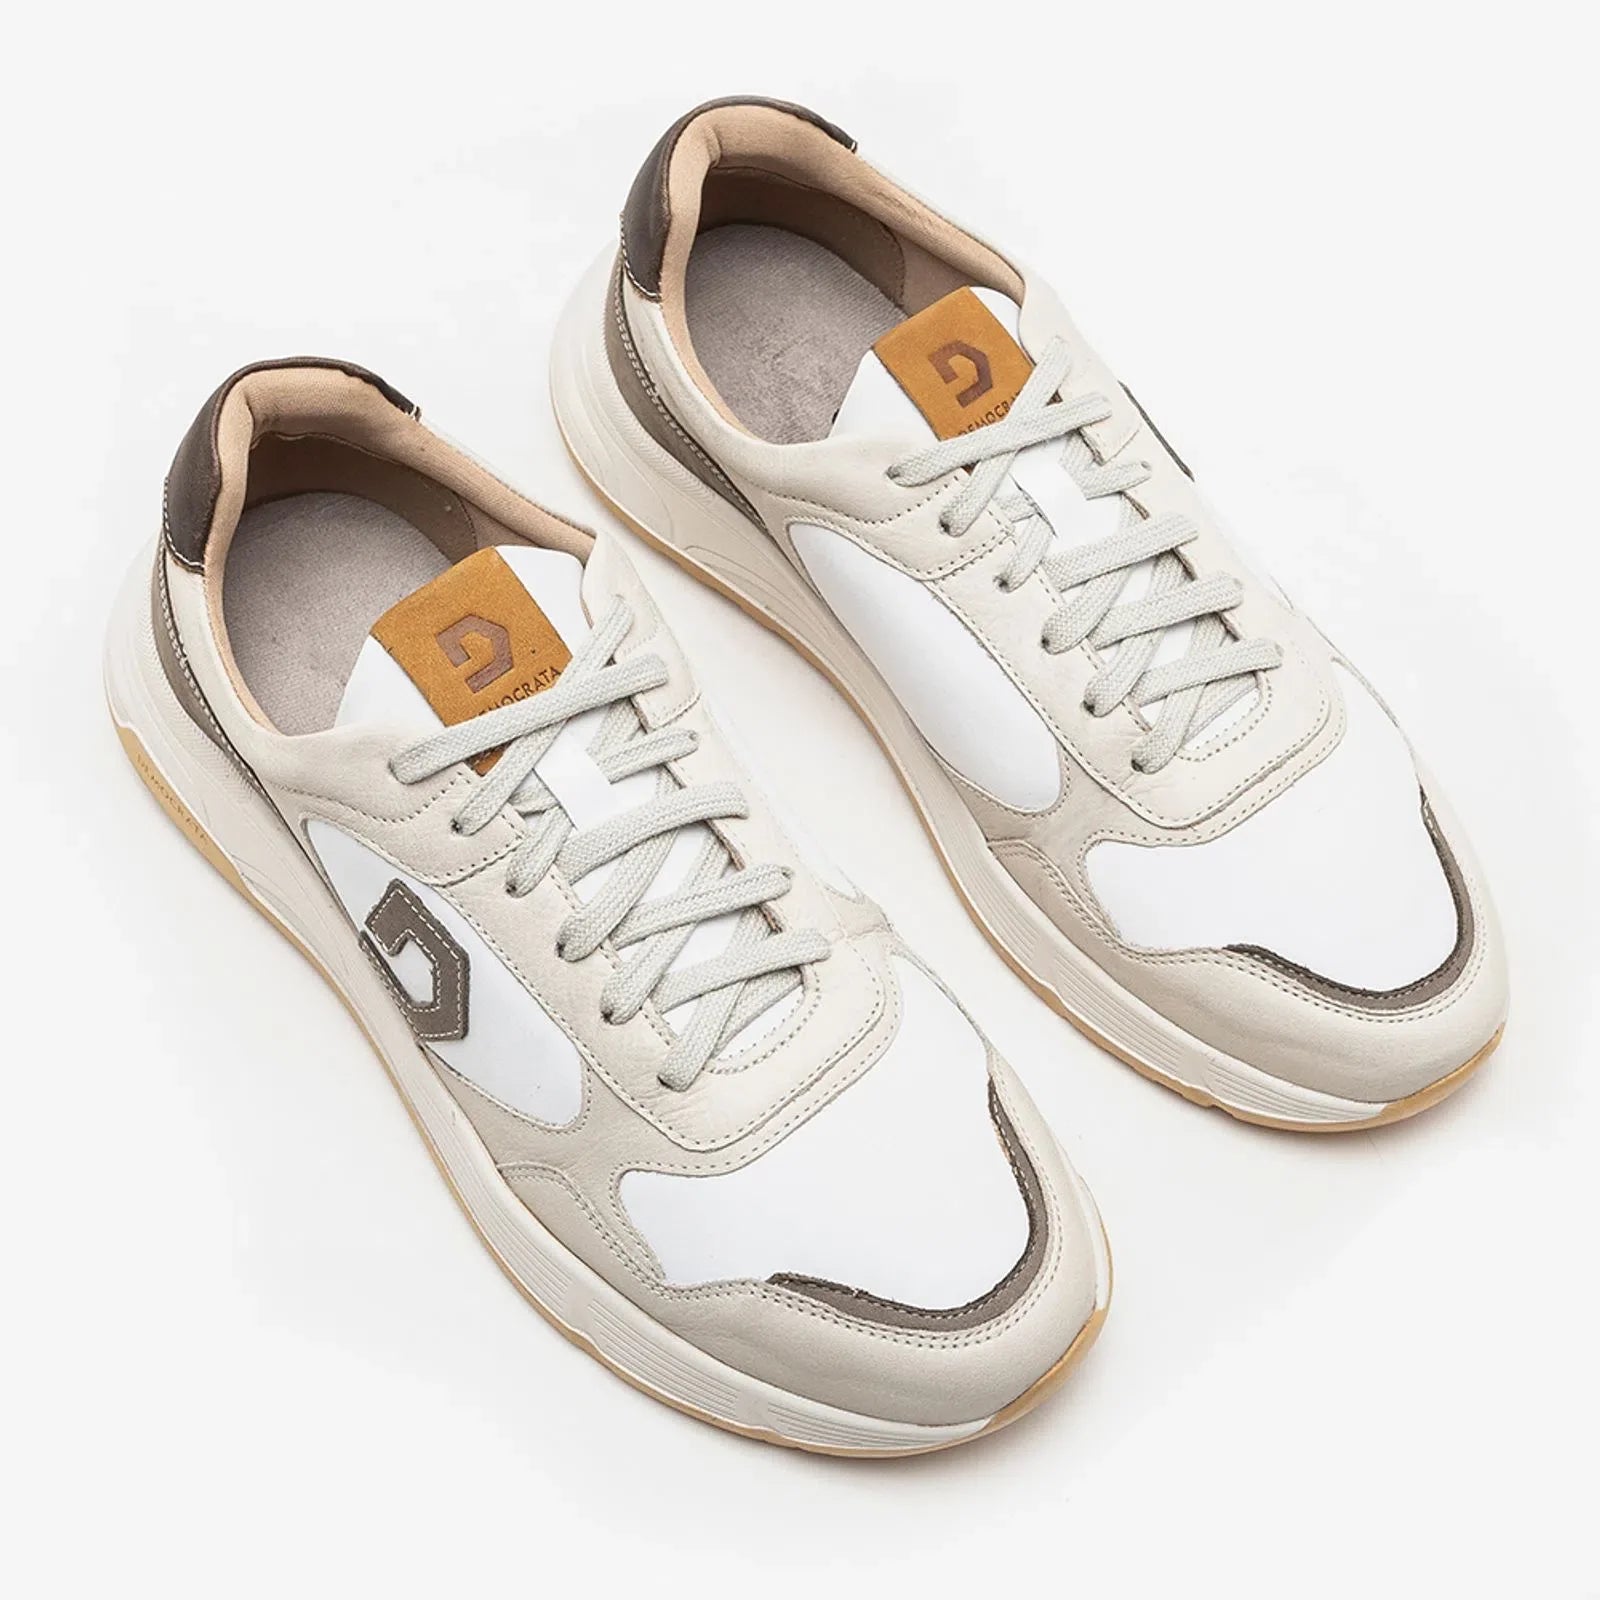 Dave Denim Sneakers - Premium Men's Lifestyle Shoes from Democrata - Just LE 5999! Shop now at TIT